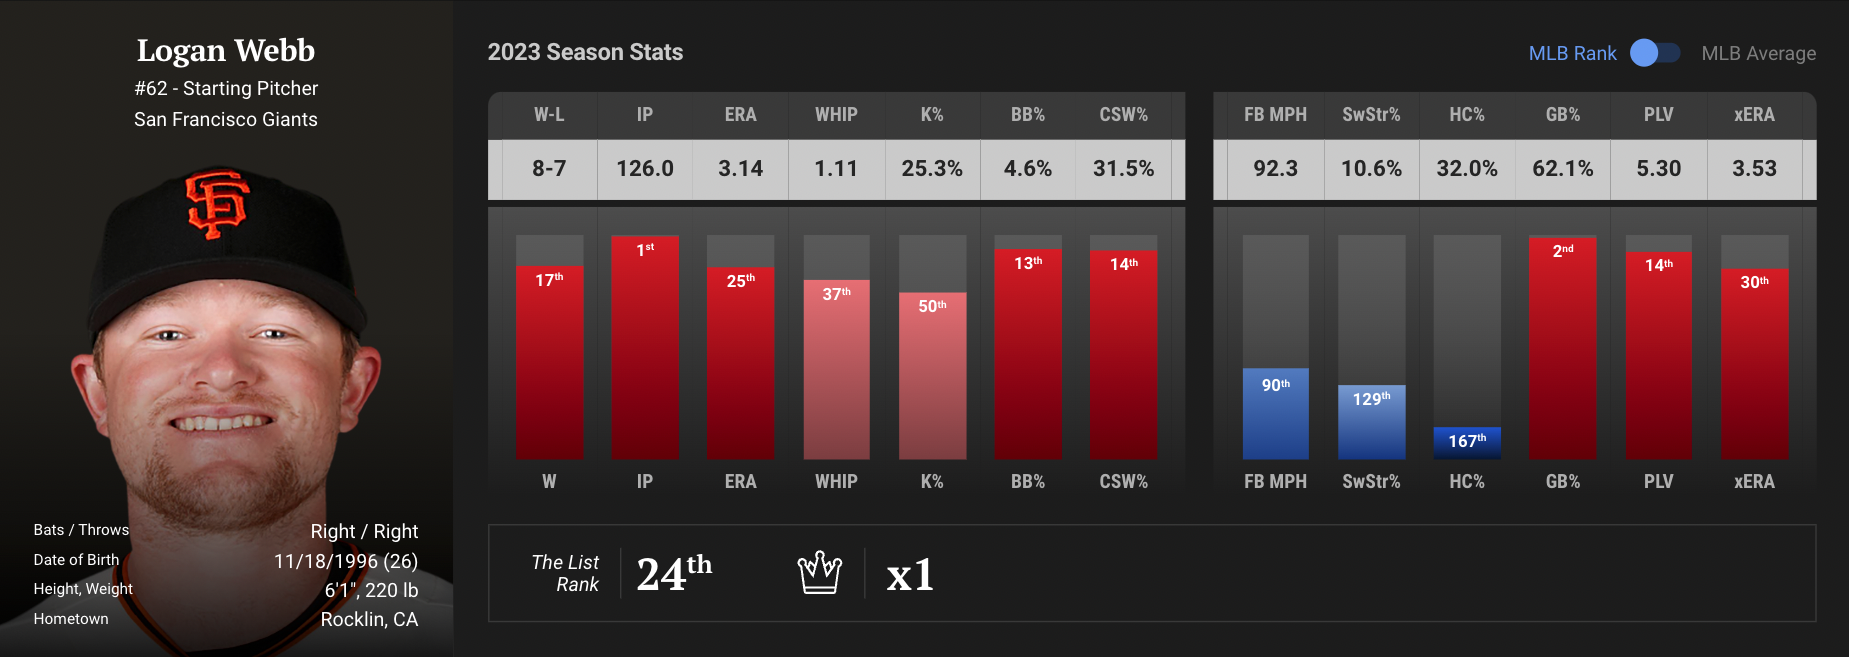 Logan Webb: Baseball News, Stats & Analysis